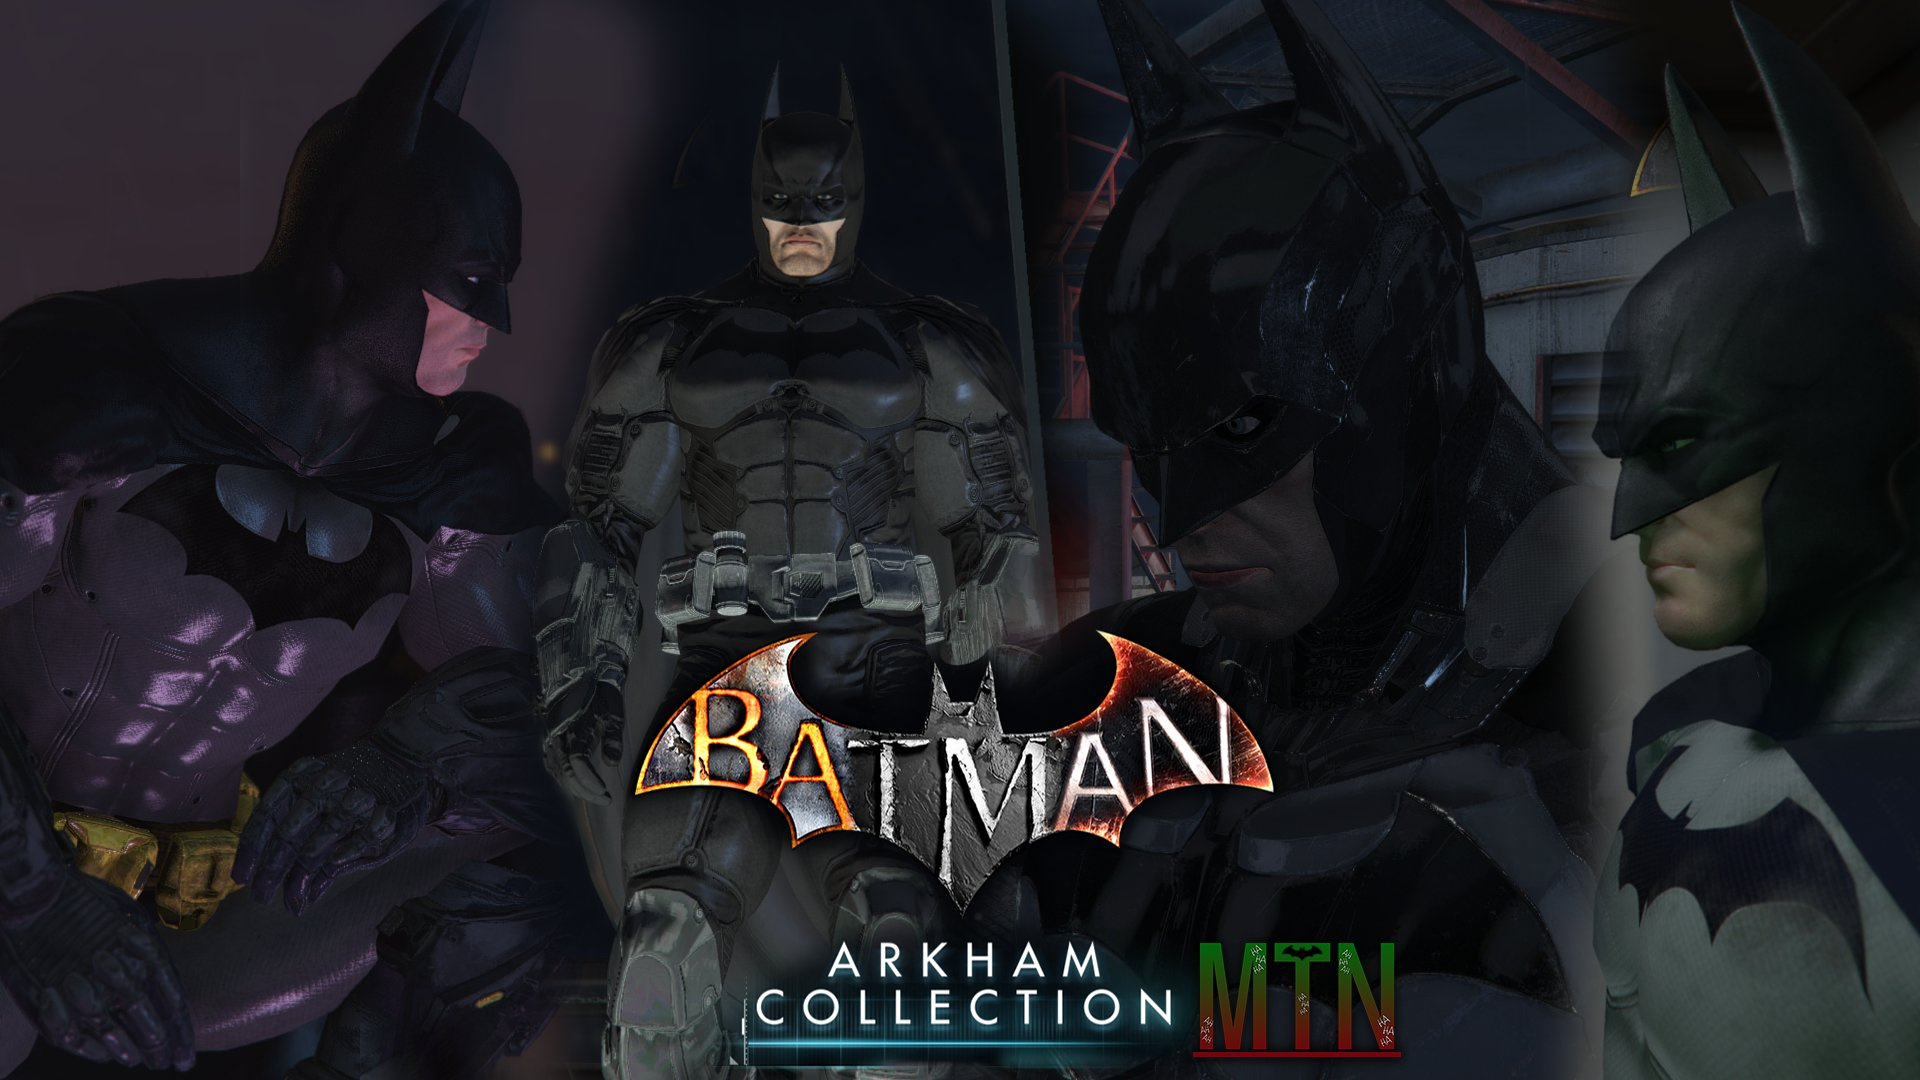 Batman: Arkham Knight Mod Unlocks Other Characters